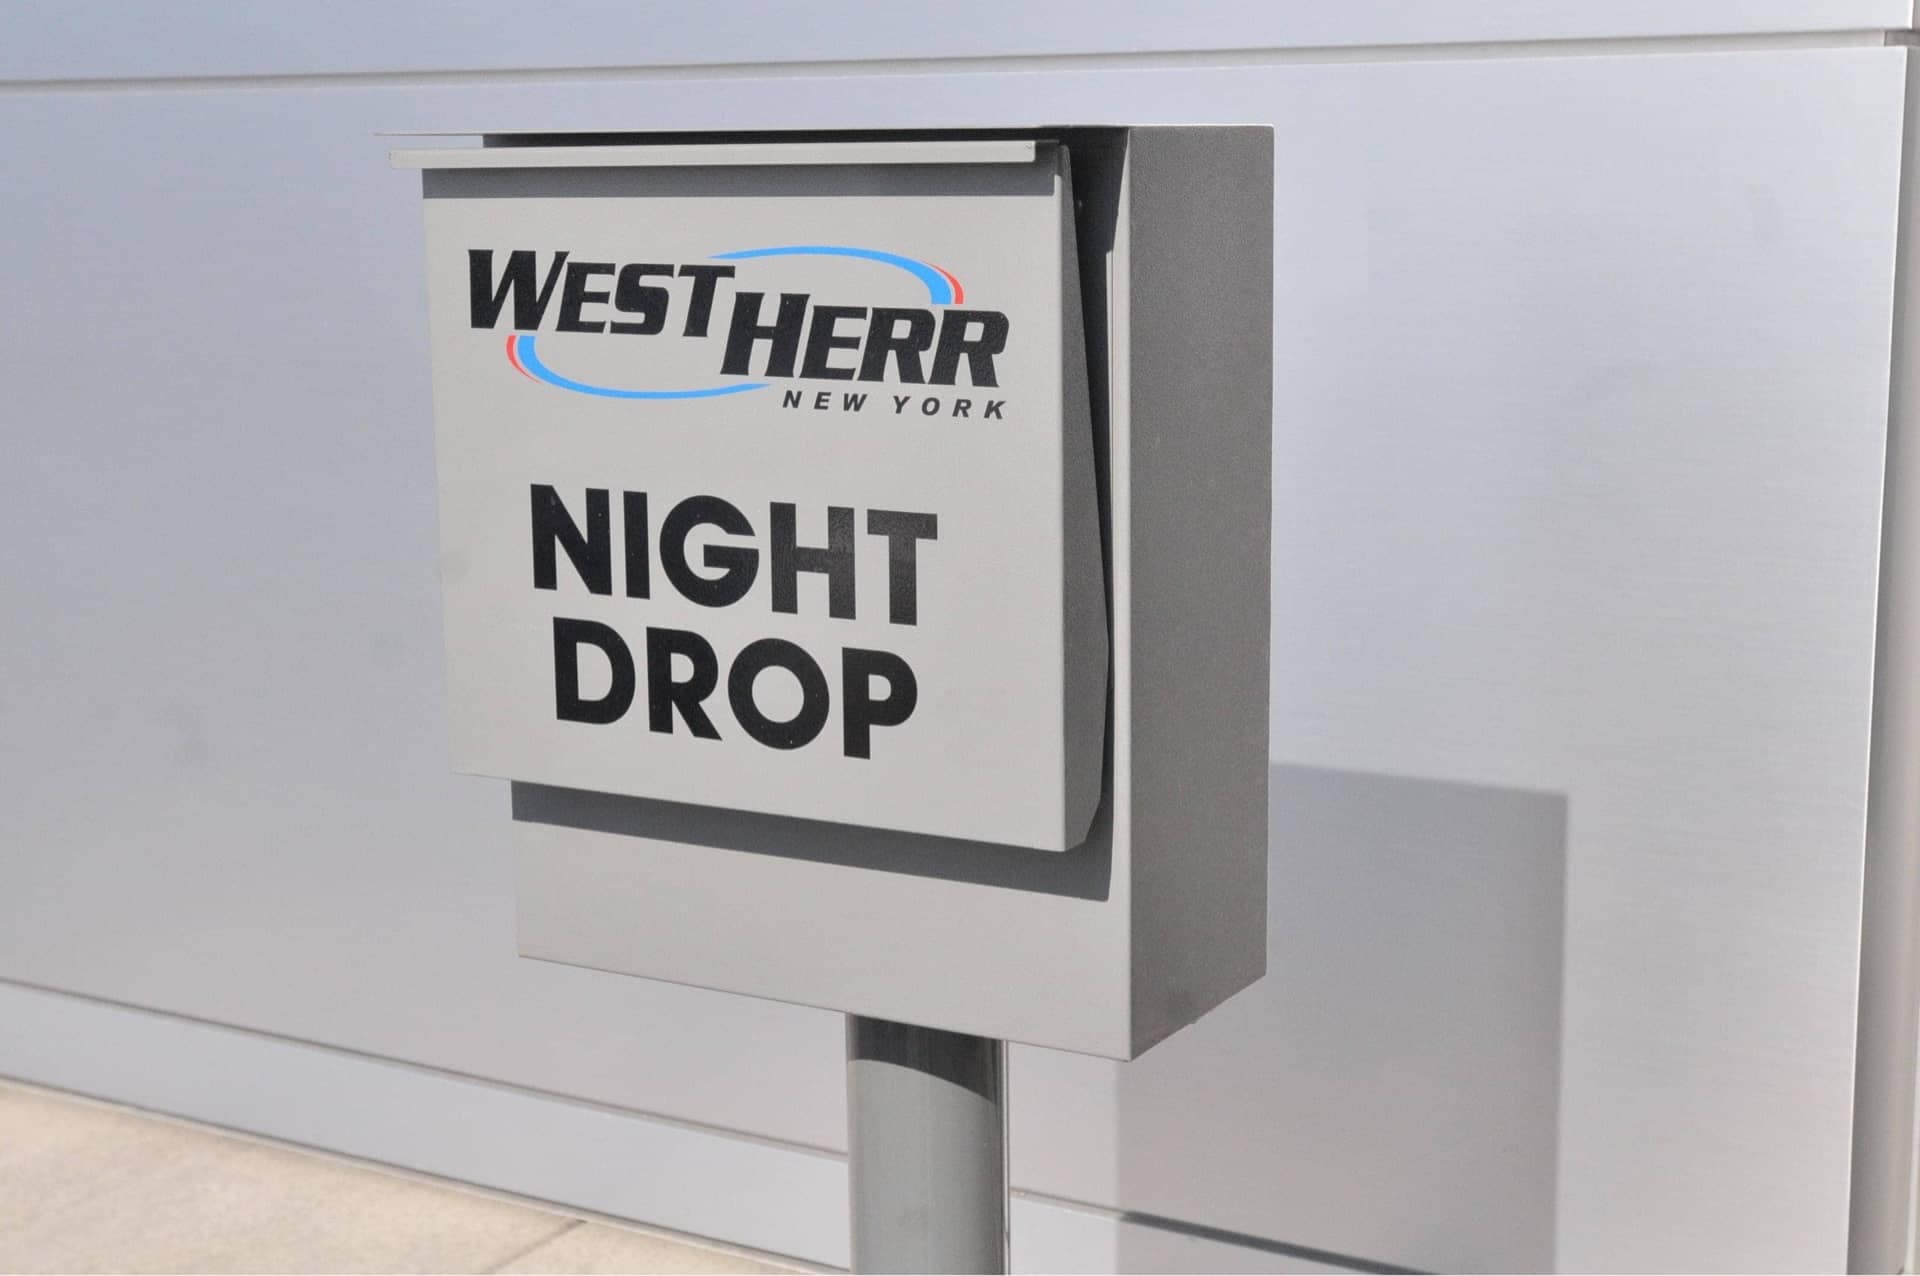 West herr night drop station